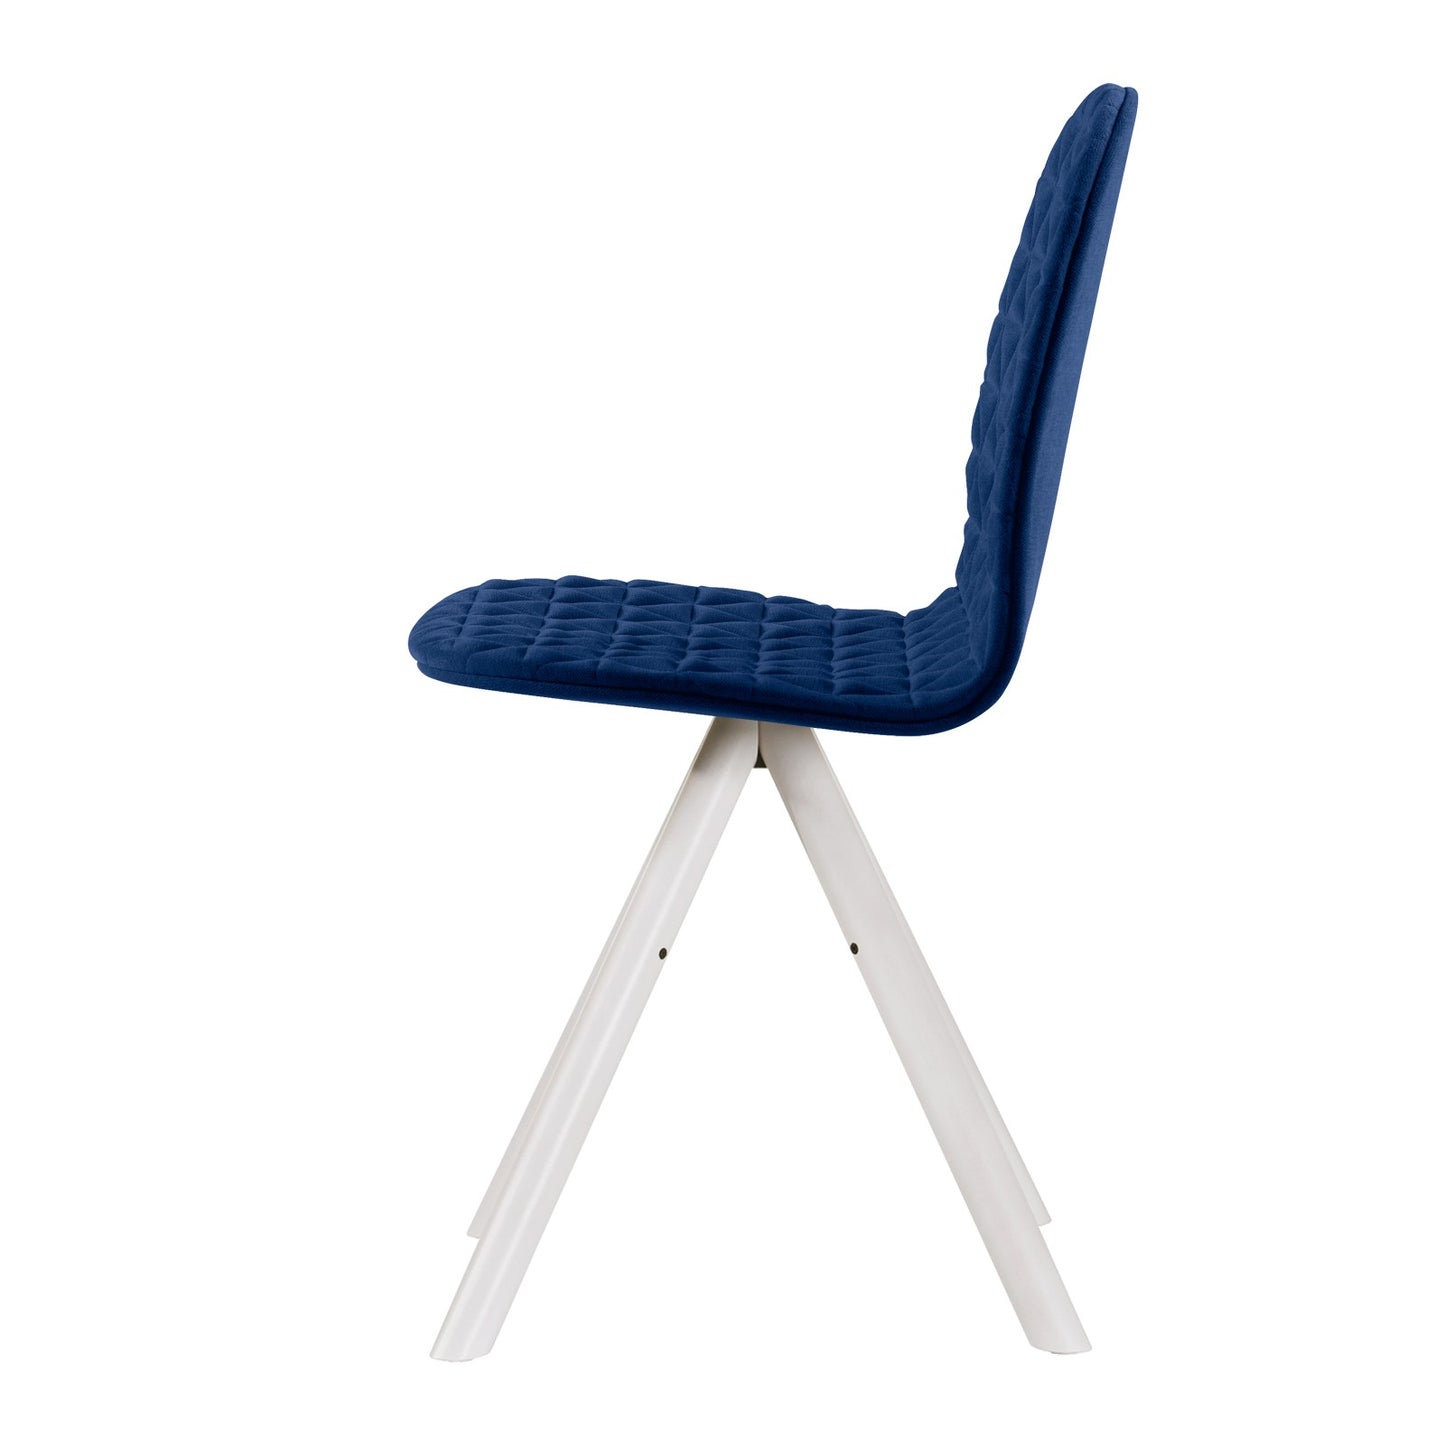 Chair Mannequin 01 white - Navy Blue